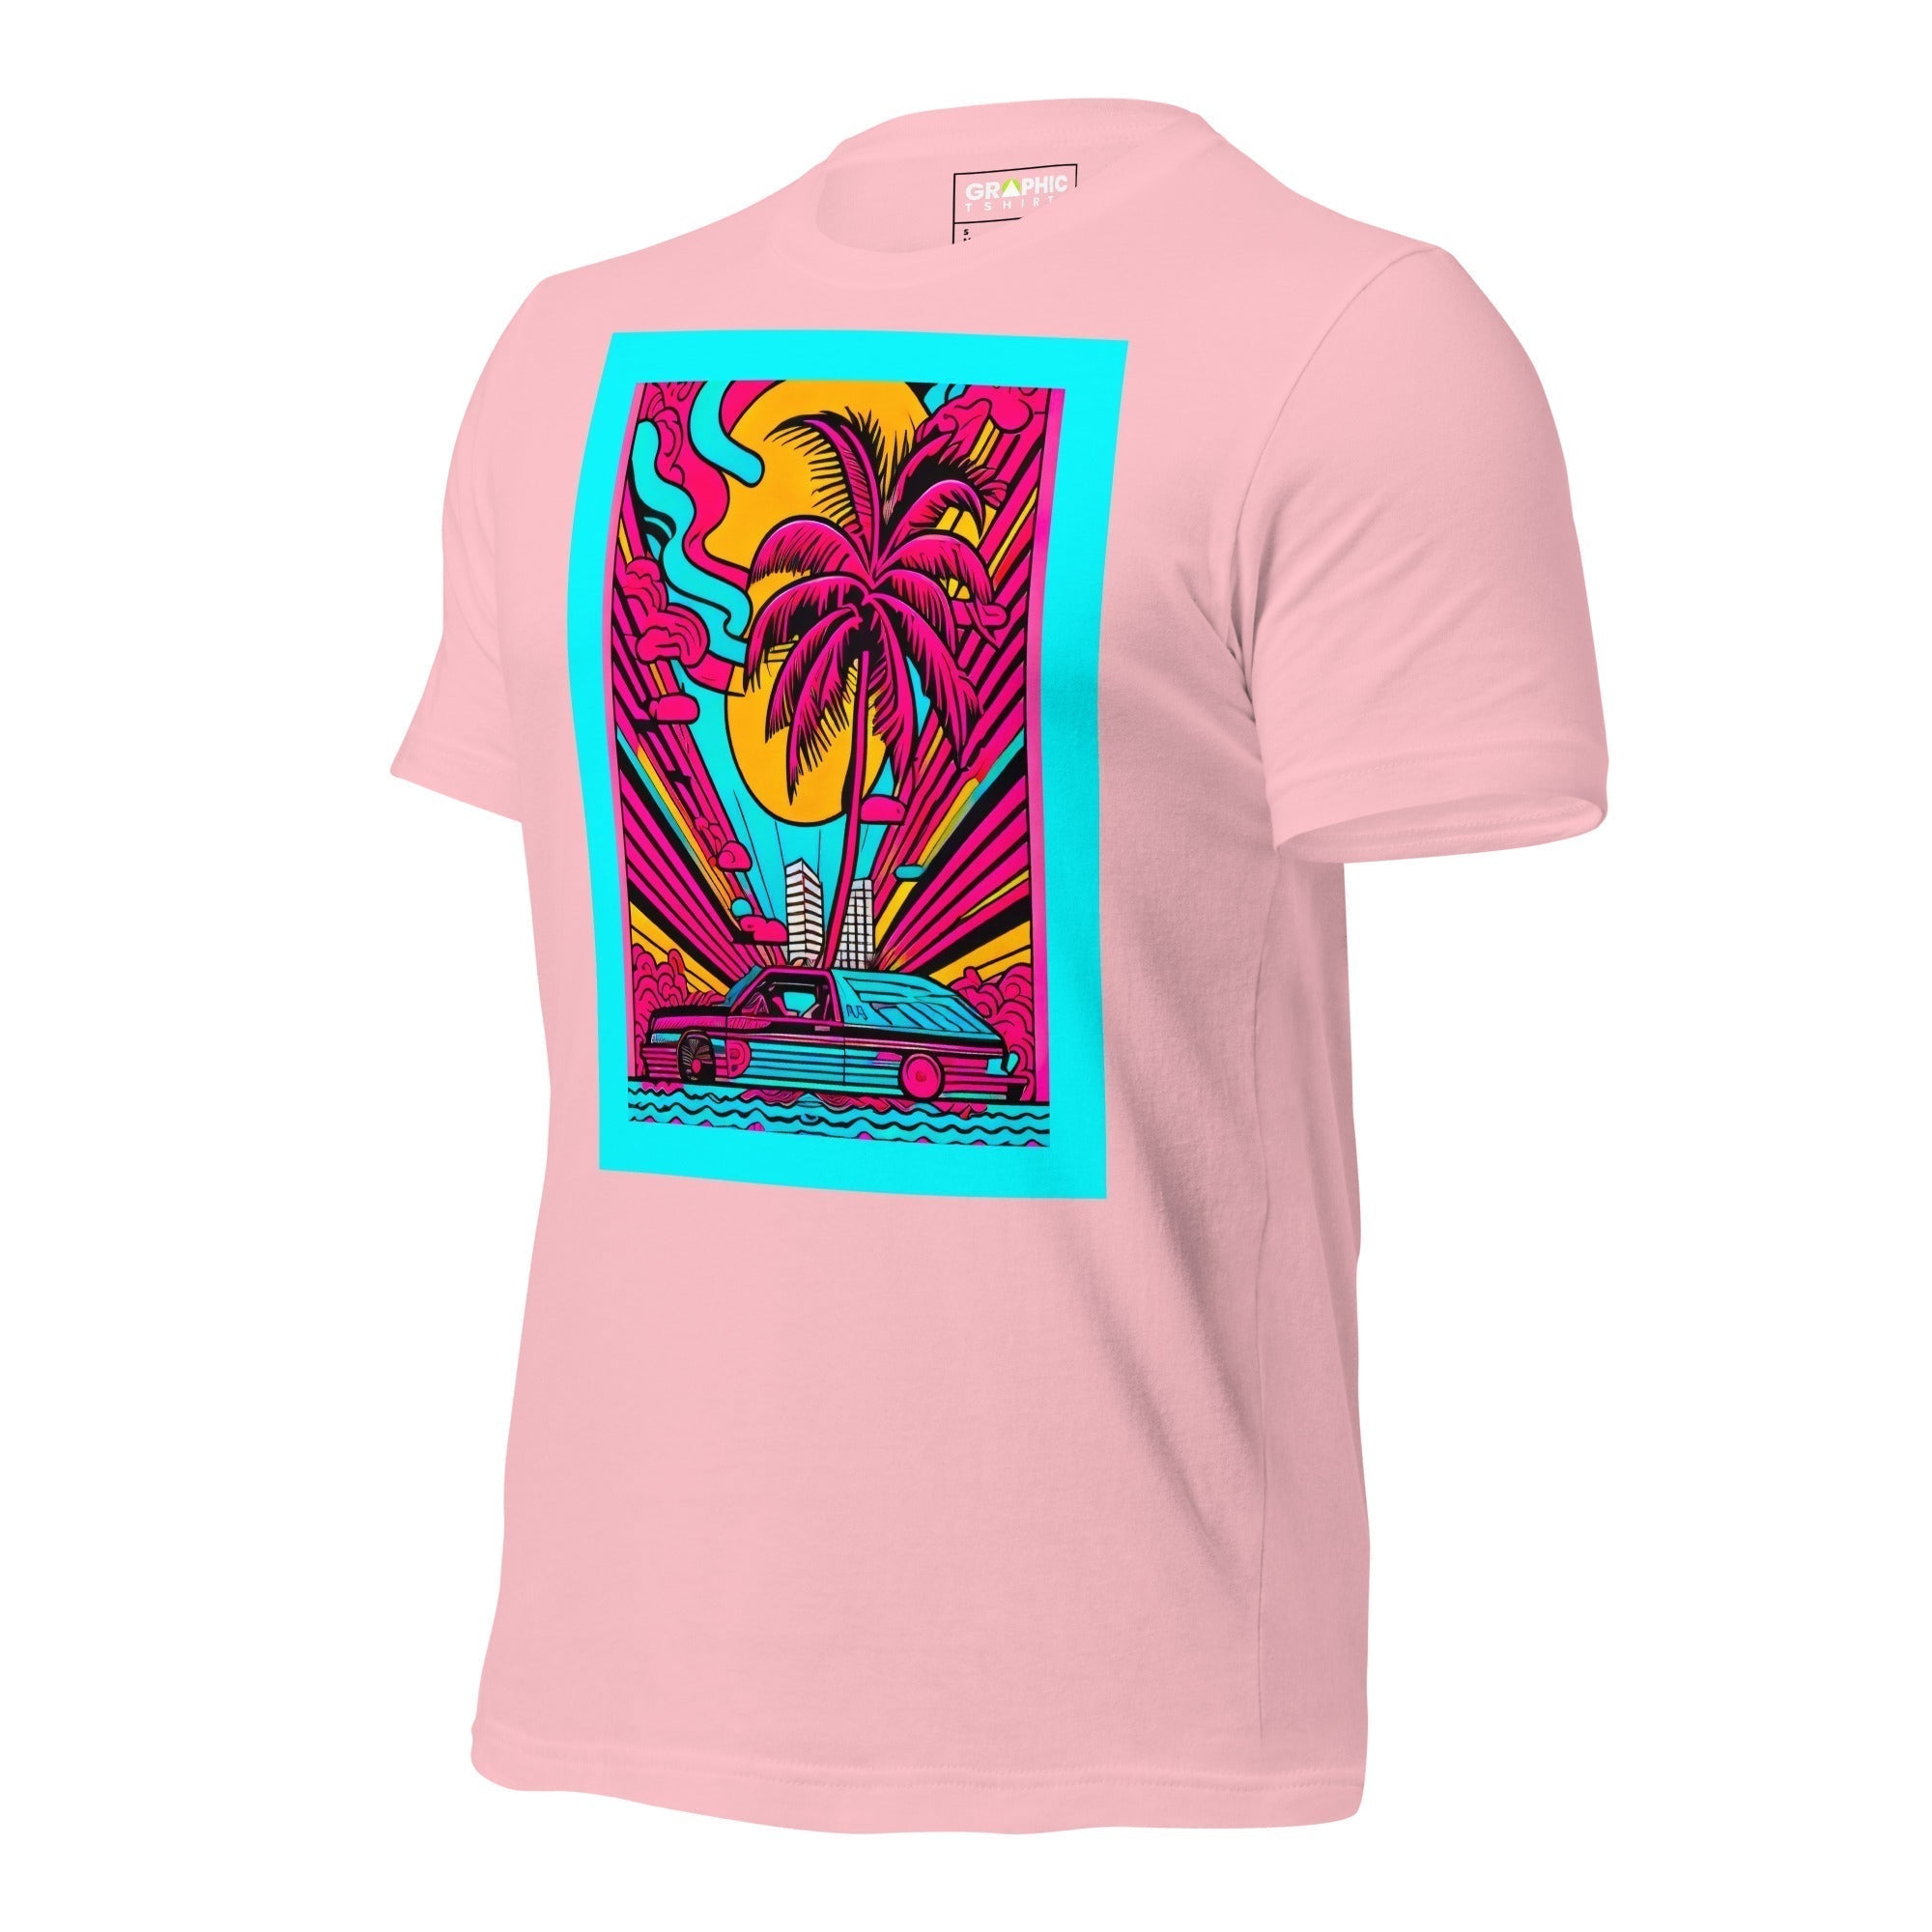 Unisex Crew Neck T-Shirt - Miami Heatwave Series v.15 - GRAPHIC T-SHIRTS